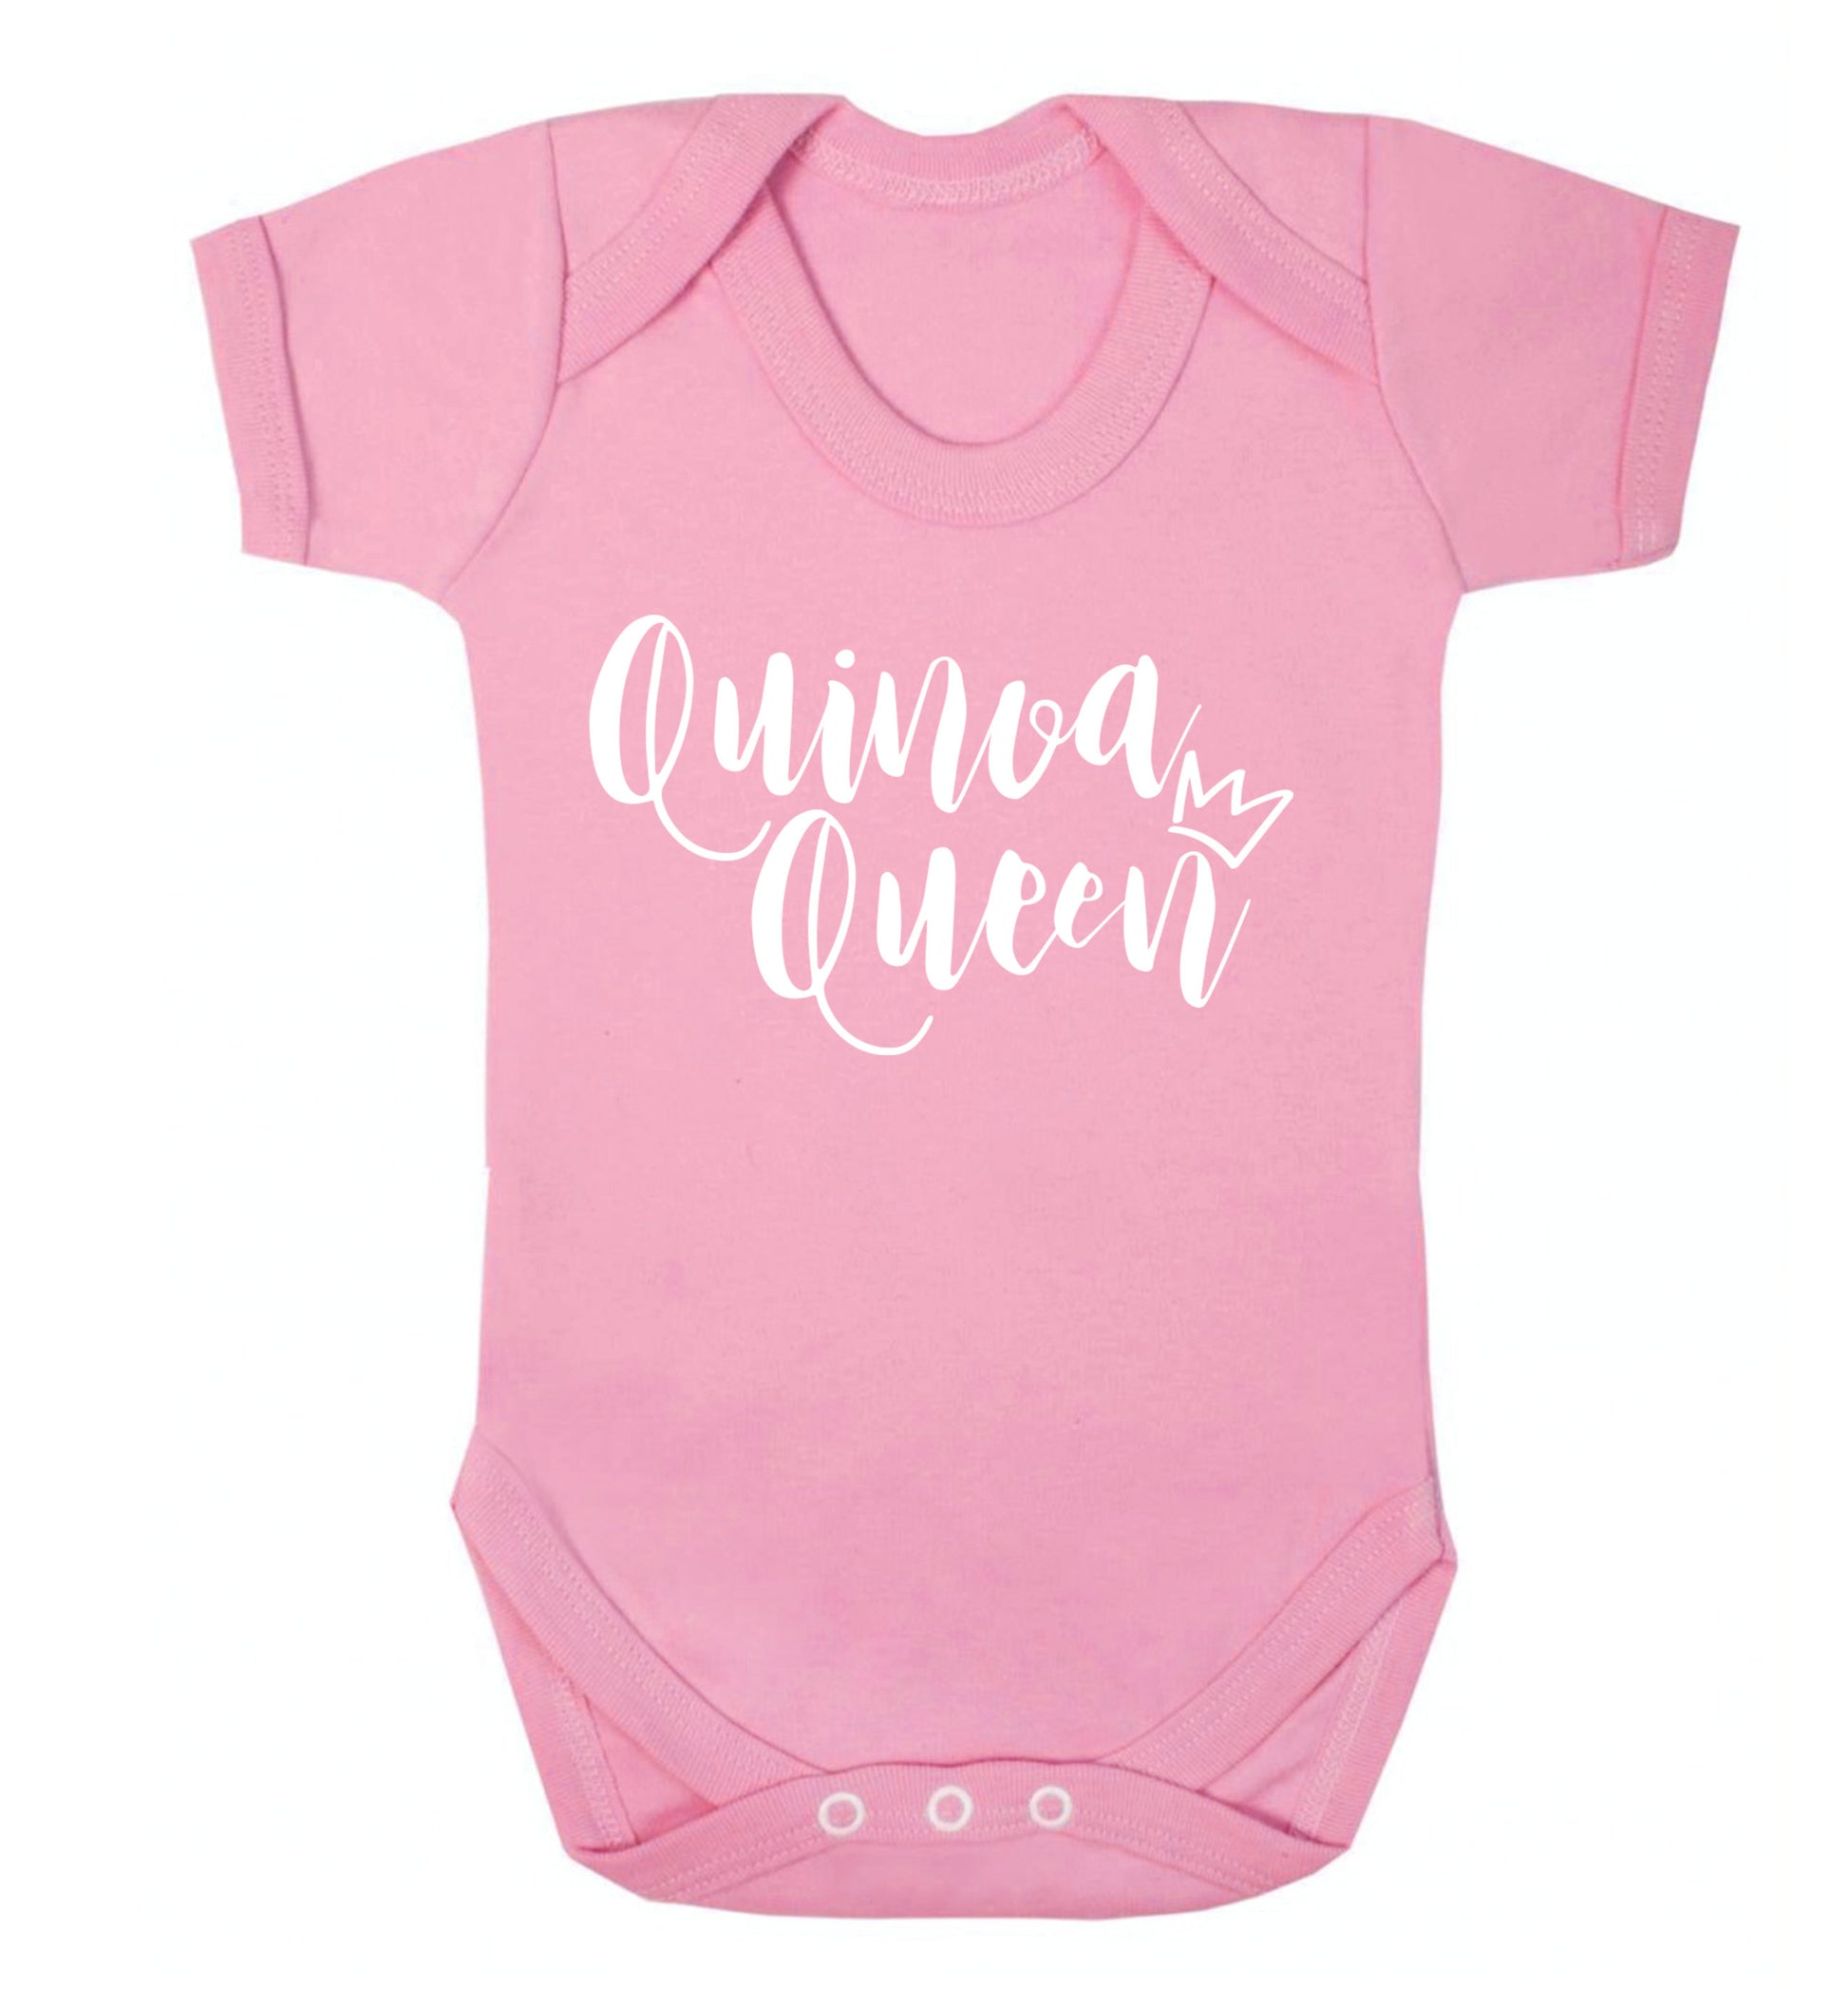 Quinoa Queen Baby Vest pale pink 18-24 months